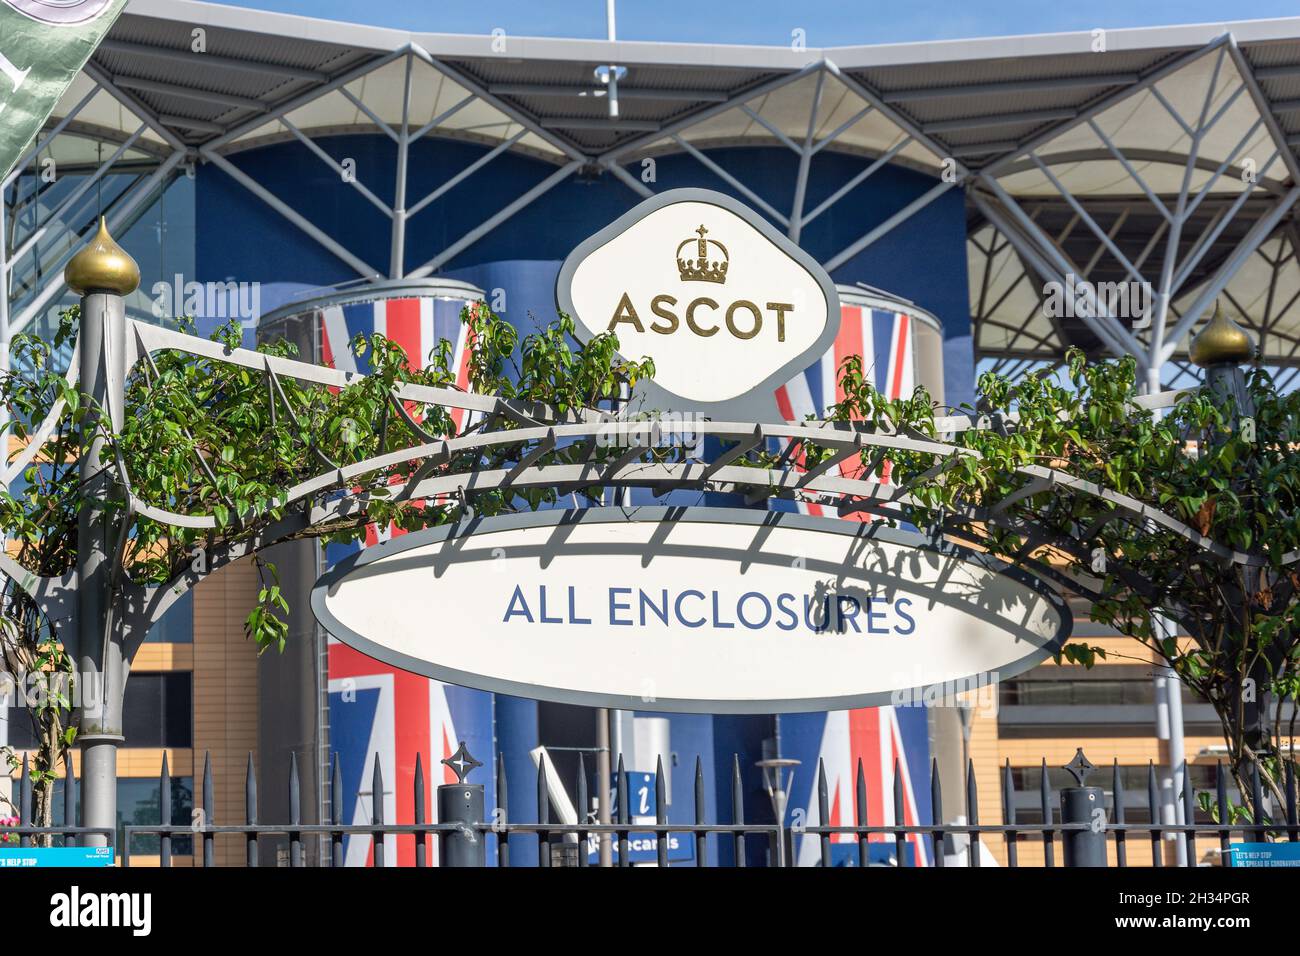 Enclosure sign and grandstand, Ascot Racecourse, Ascot High Street, Ascot, Berkshire, England, United Kingdom Stock Photo